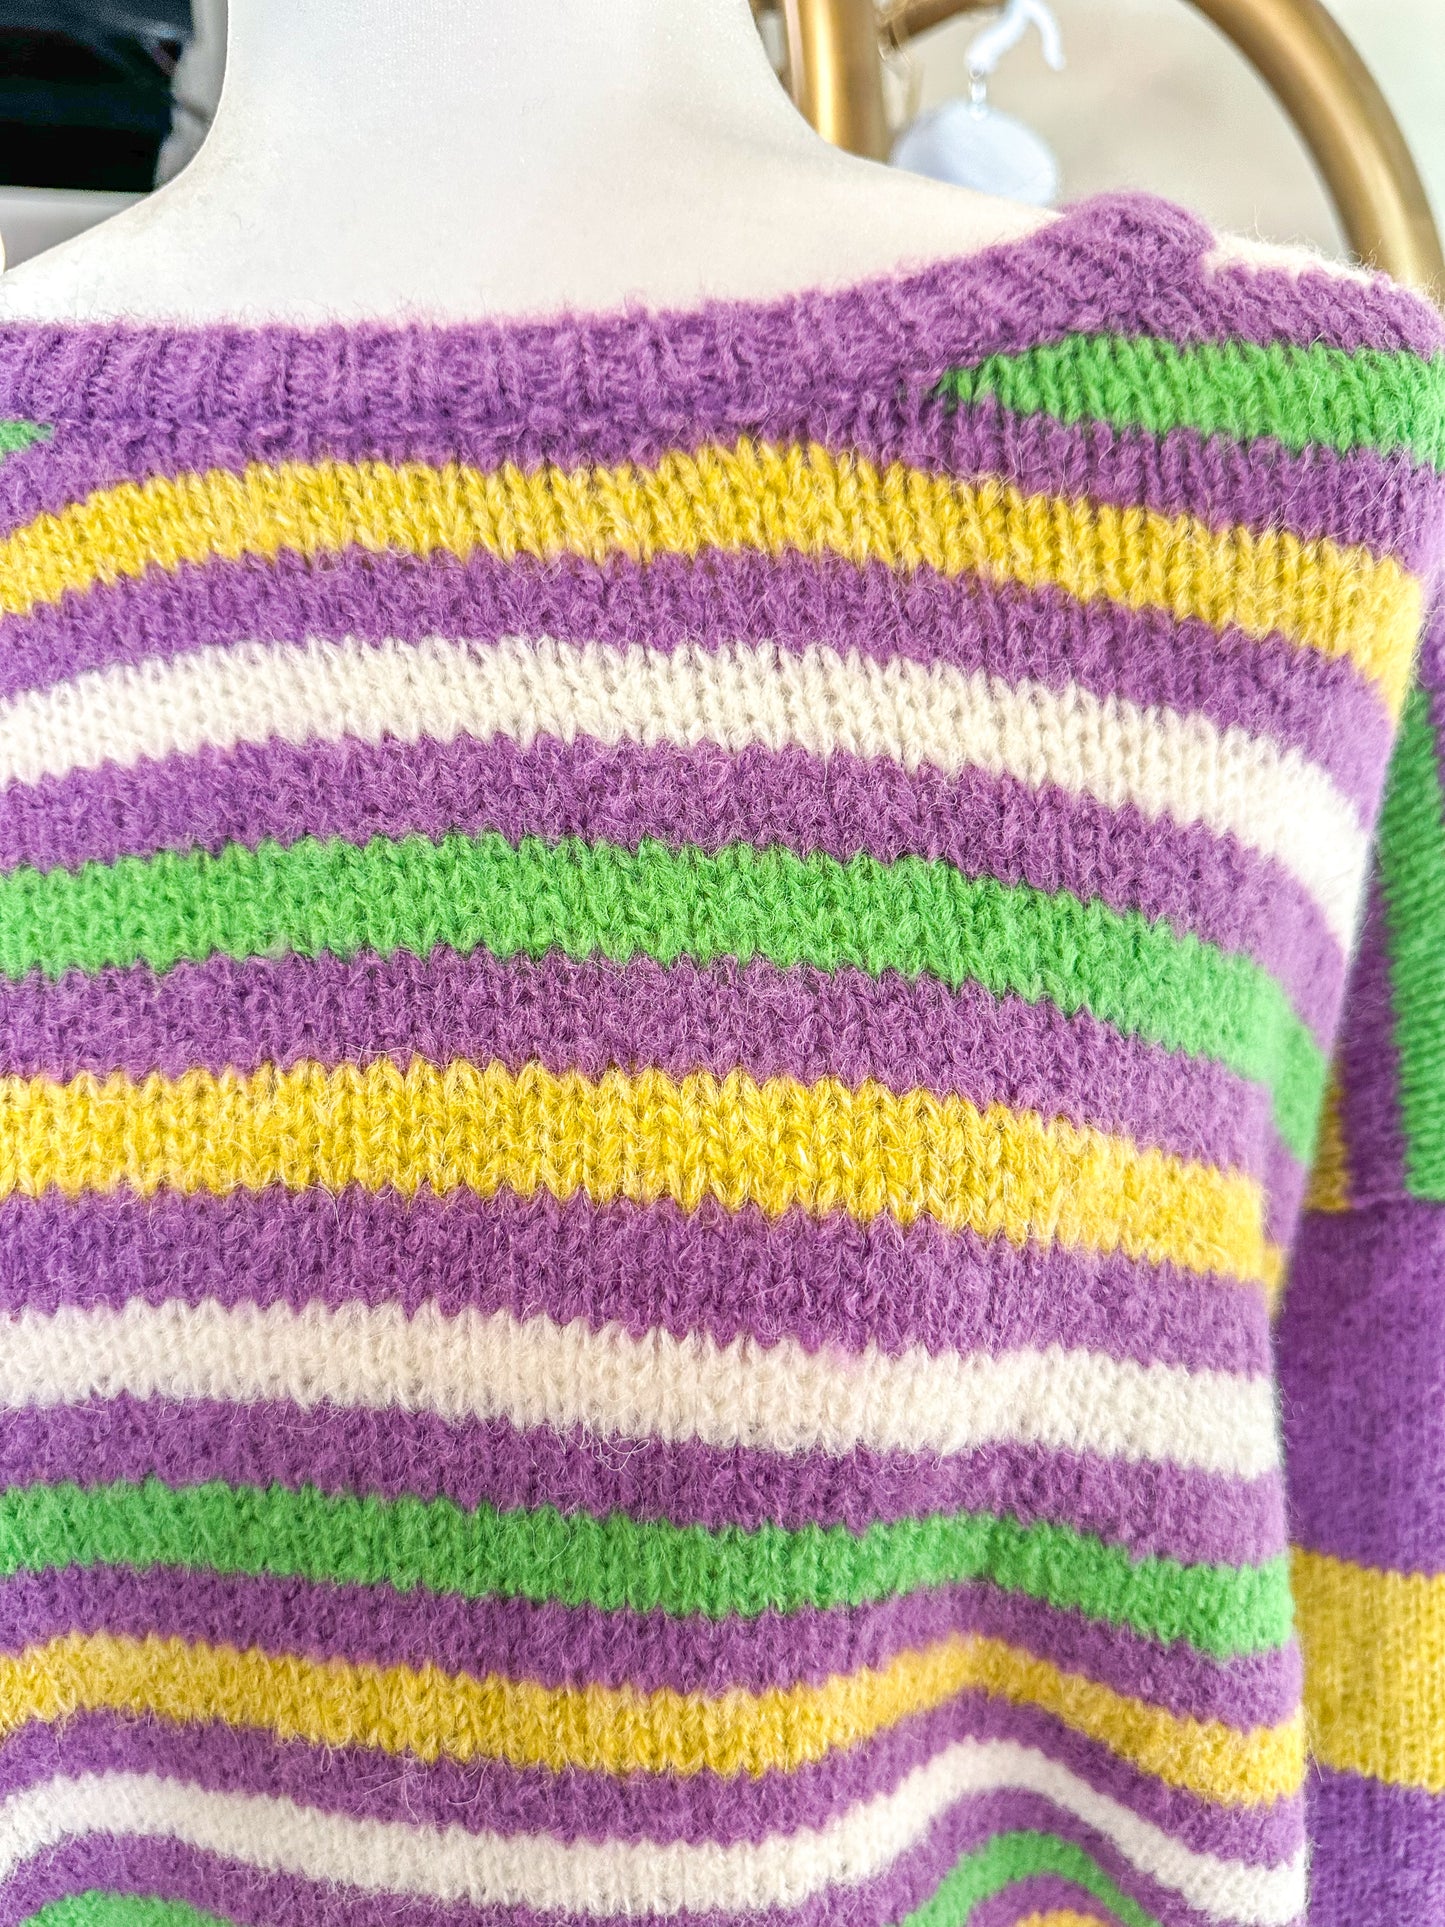 Striped Mardi Gras Colors Sweater